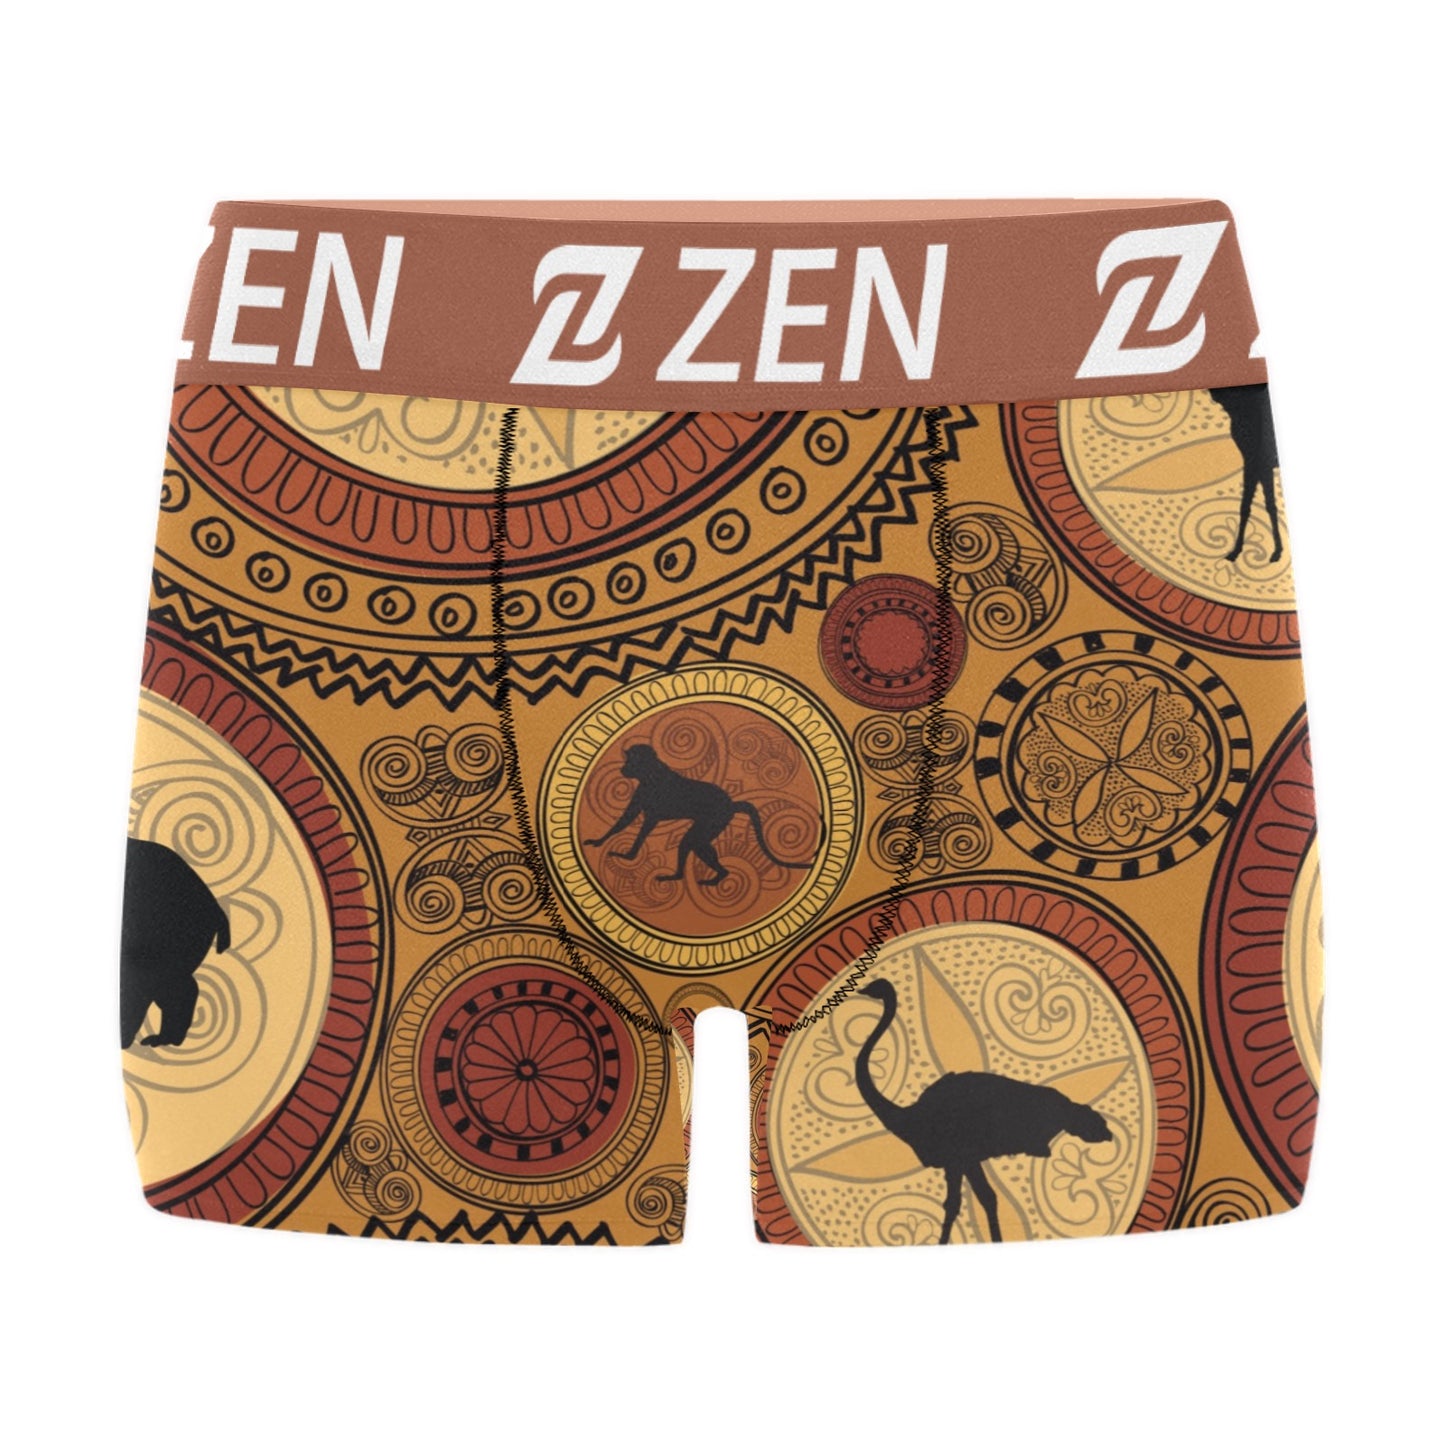 Zen Waistband - Amazon